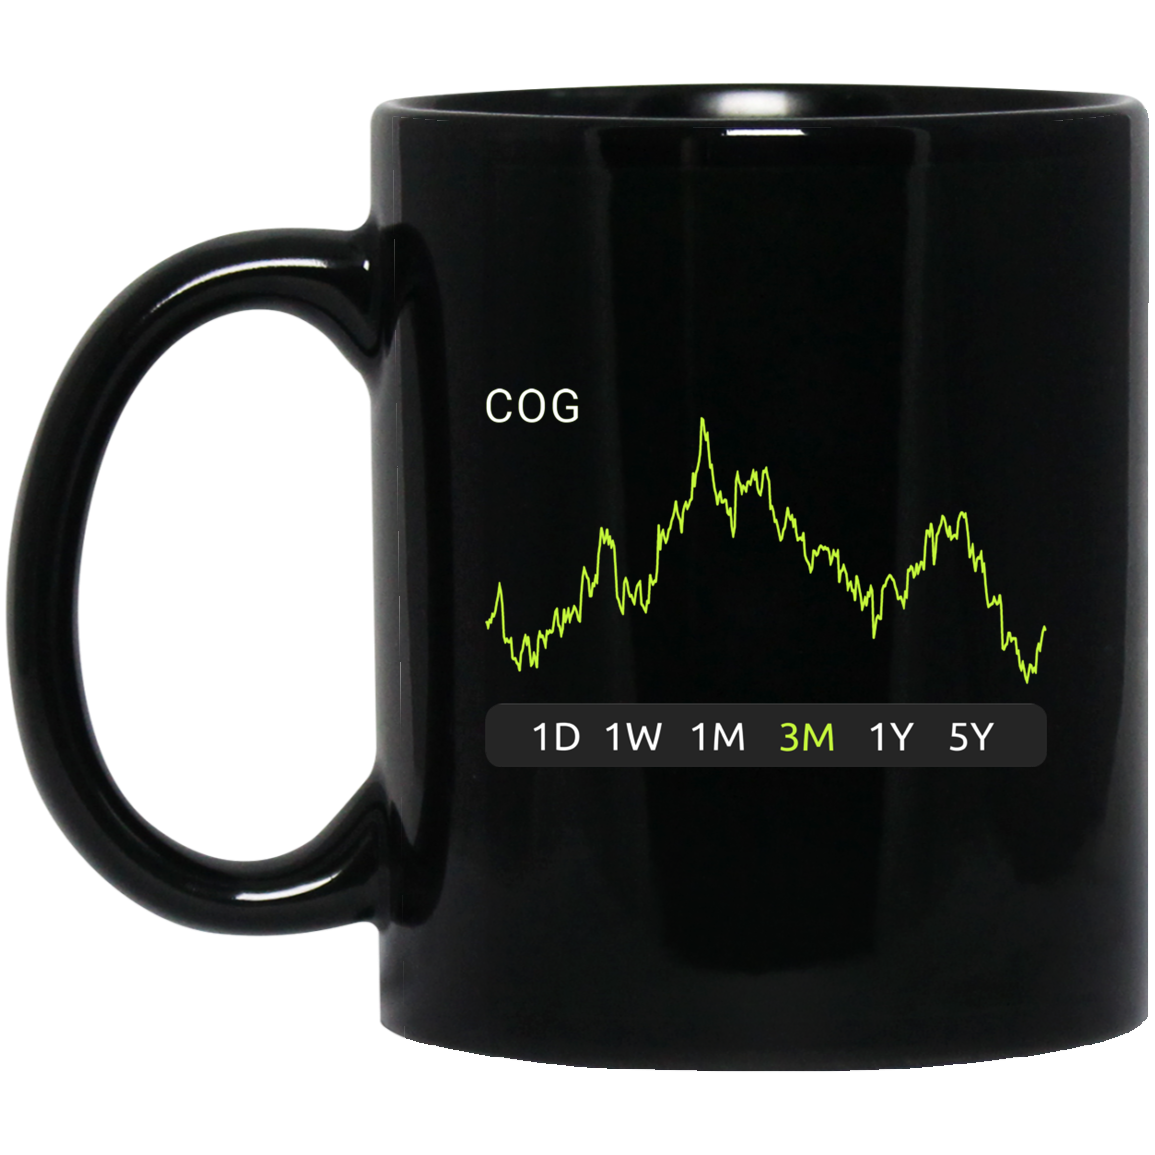 COG Stock 3m Mug